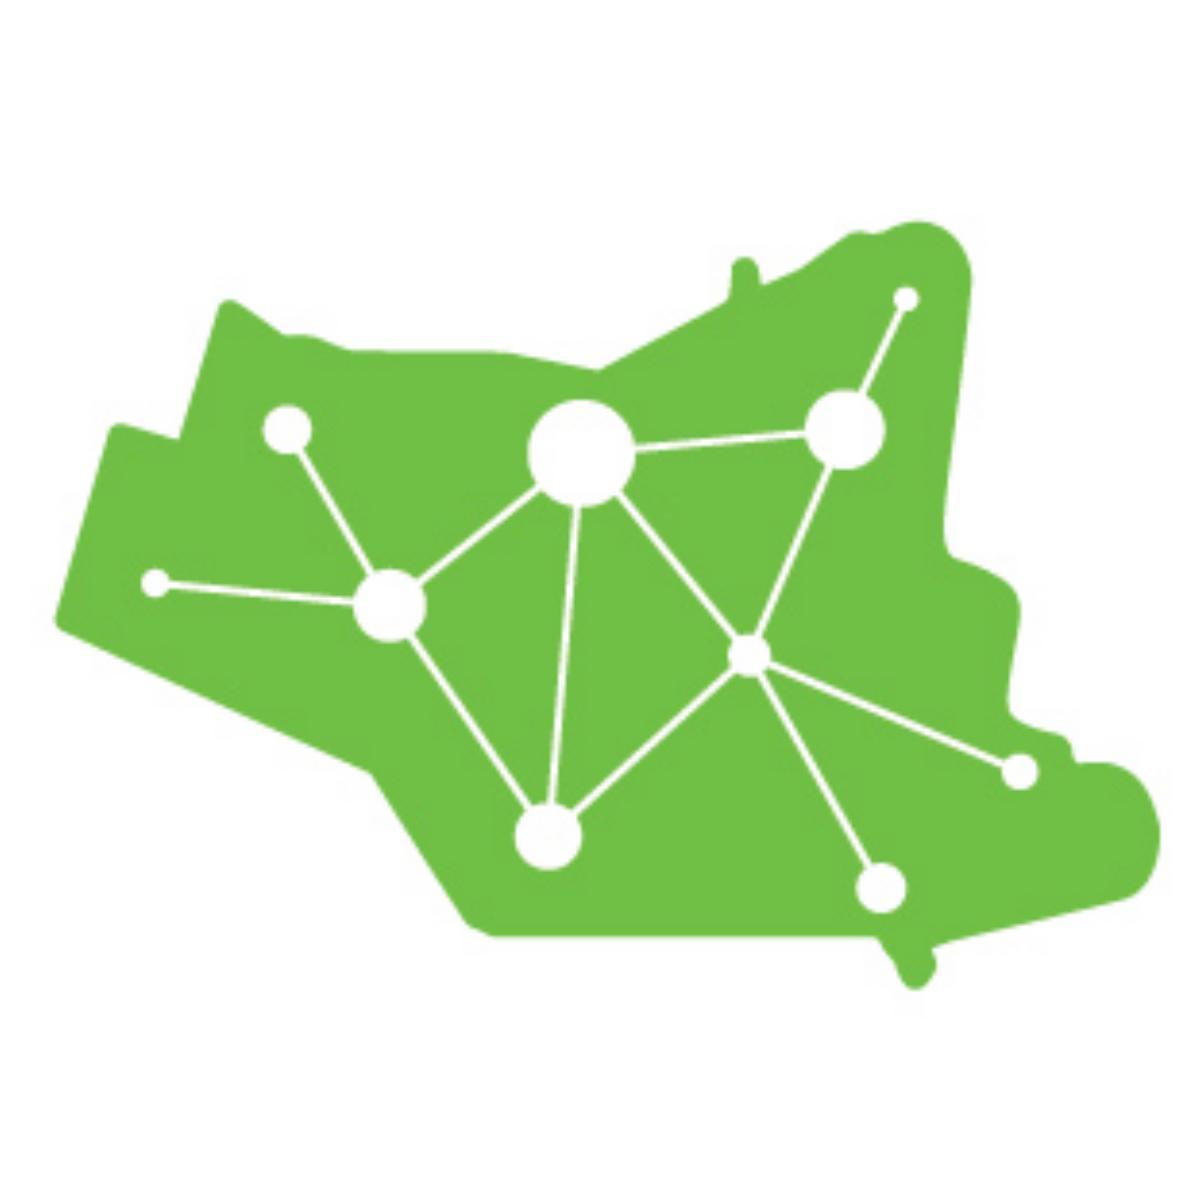 NiagaraOpenData.ca relaunches to better serve Niagara’s open data community